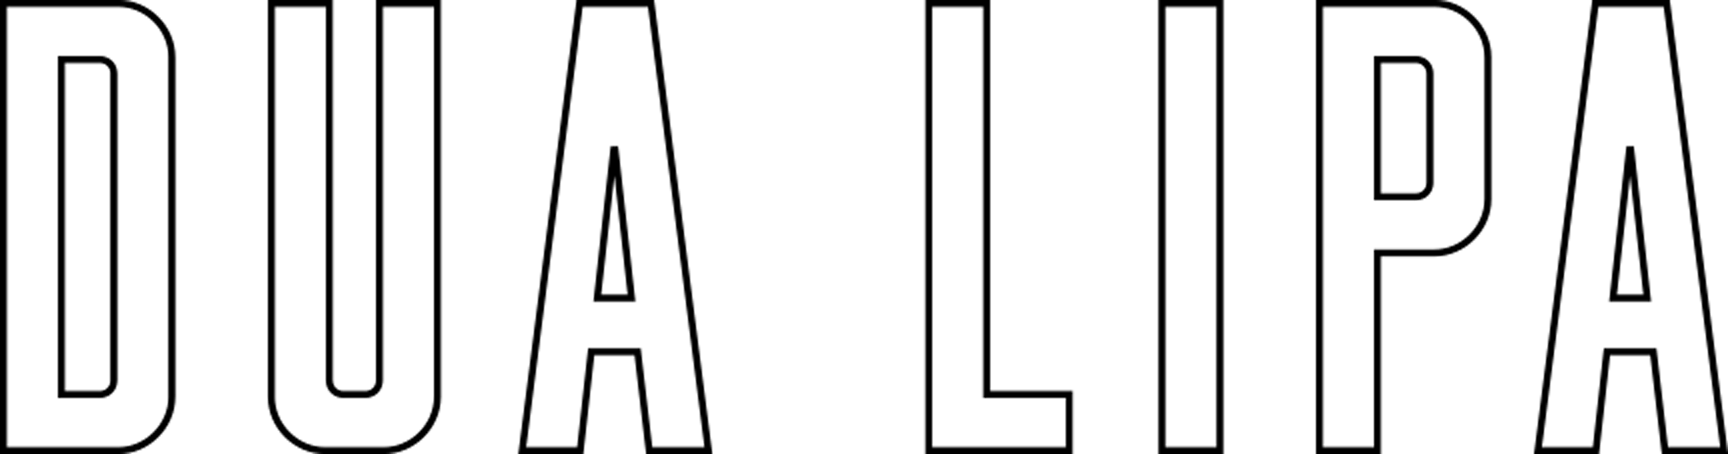 Dua Lipa Logo PNG Image Background